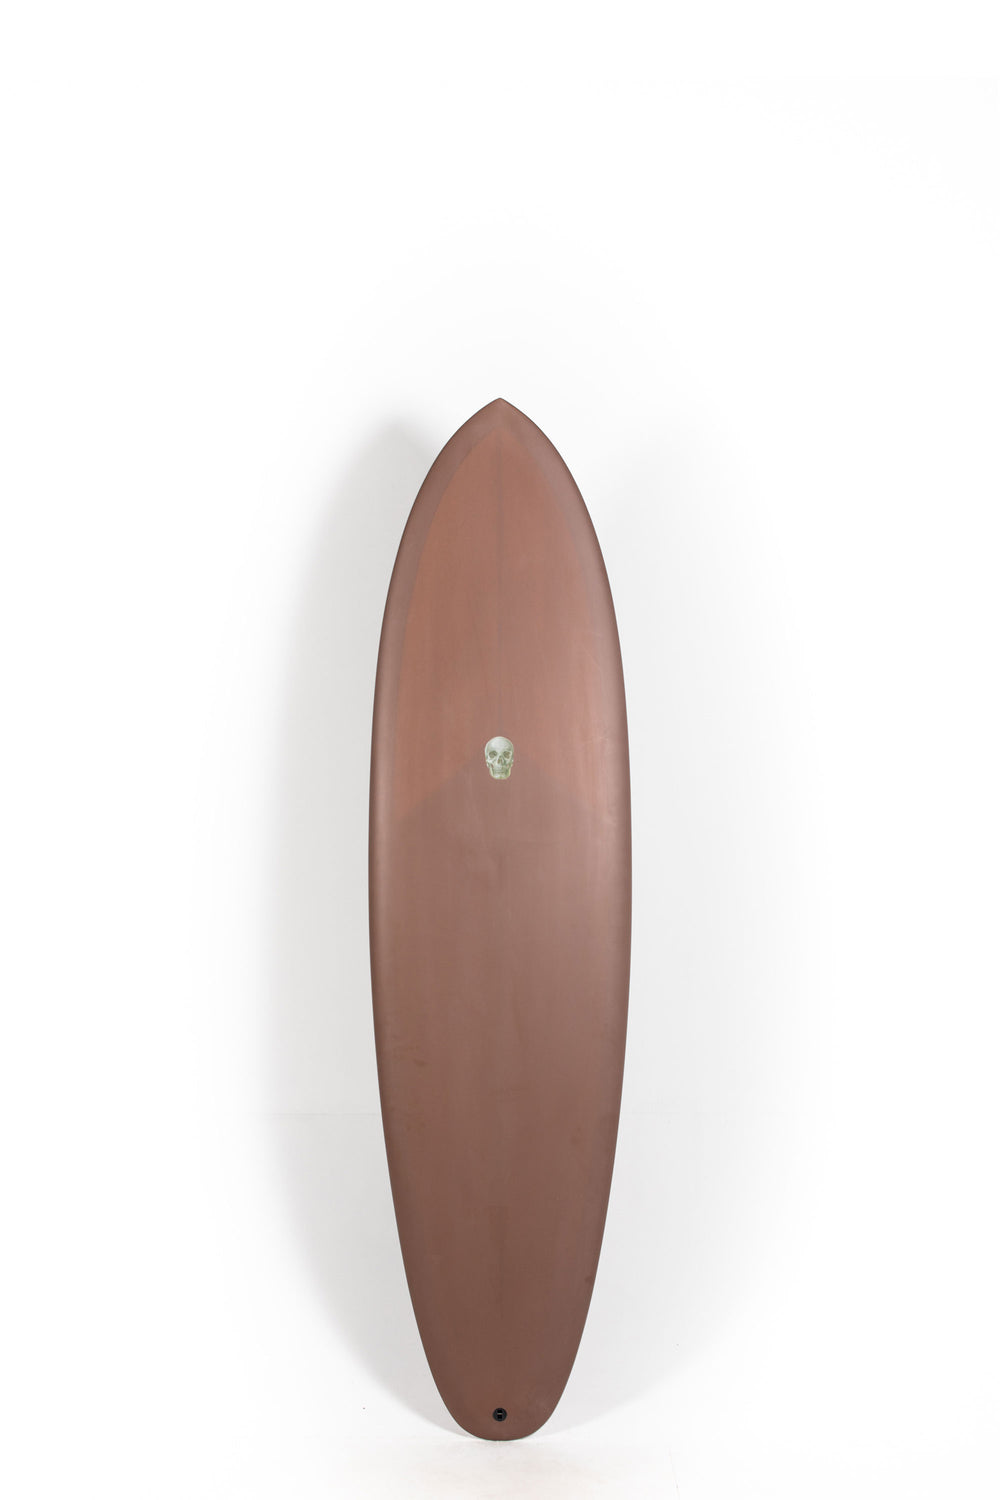 Pukas Surf Shop - Christenson Surfboards - TWIN TRACKER - 6'10